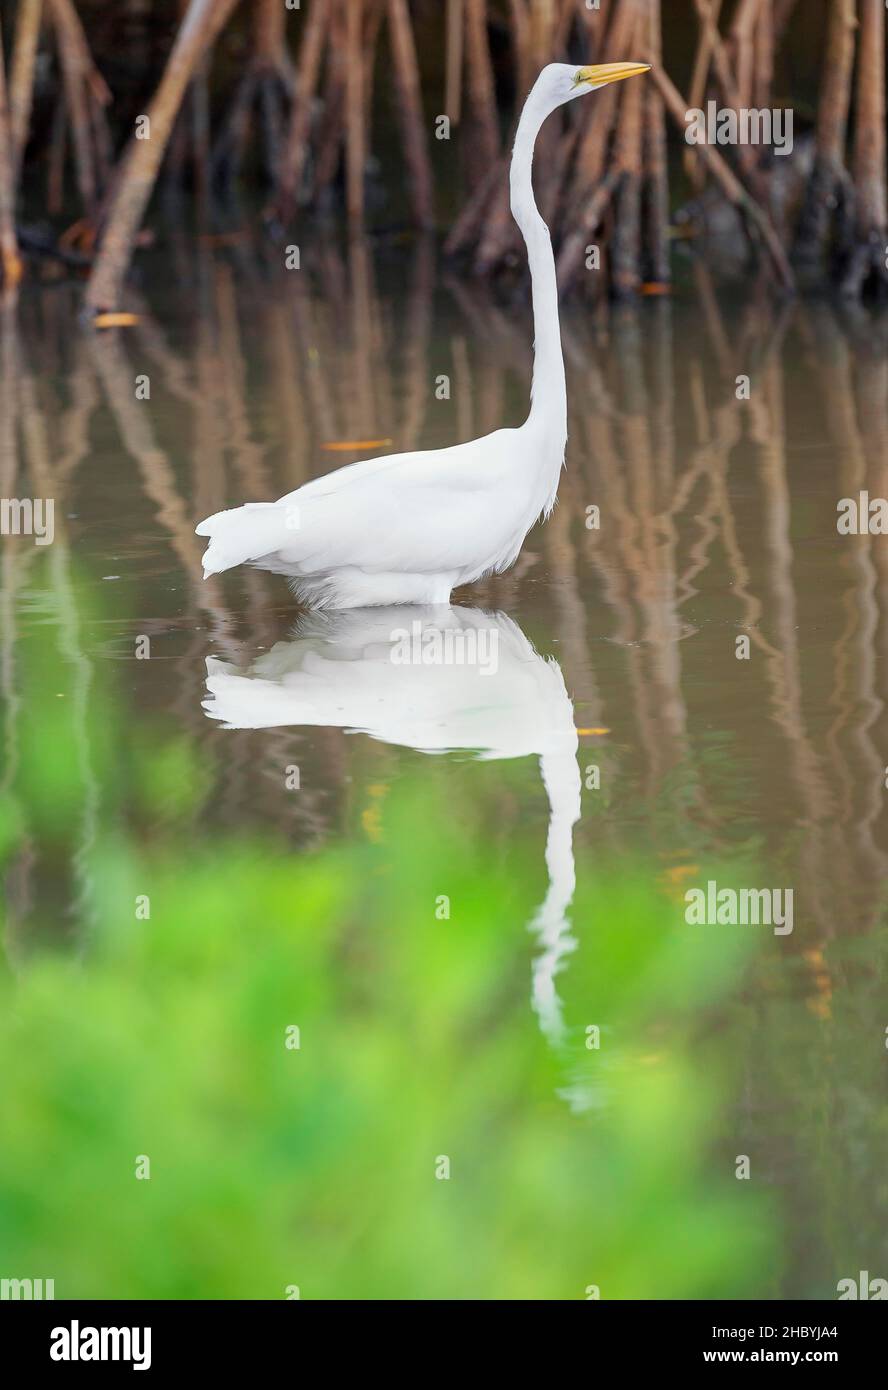 Great white egret (Ardea alba) looking for food, Sanibel Island, J.N. Ding Darling National Wildlife Refuge, Florida, USA Stock Photo